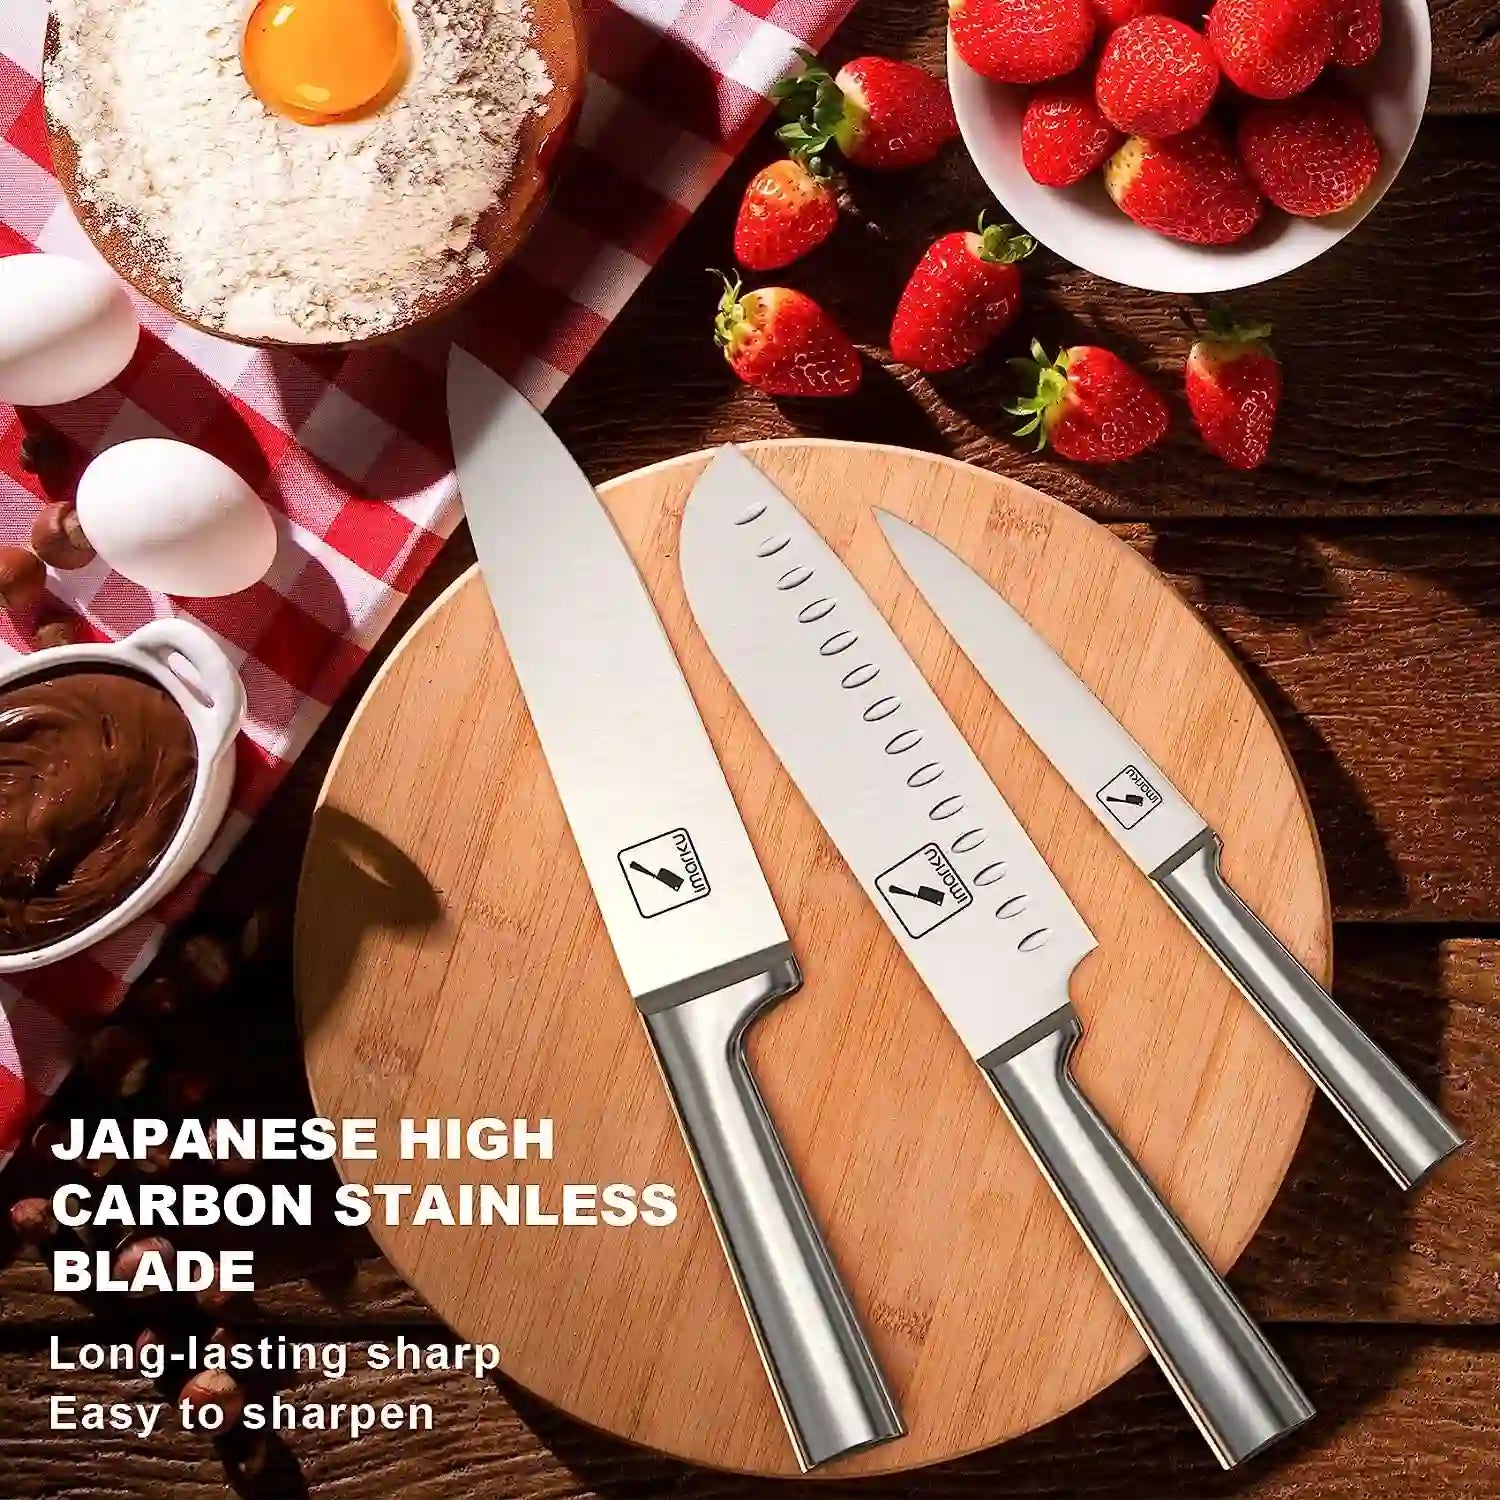 15-Piece kitchen knife set